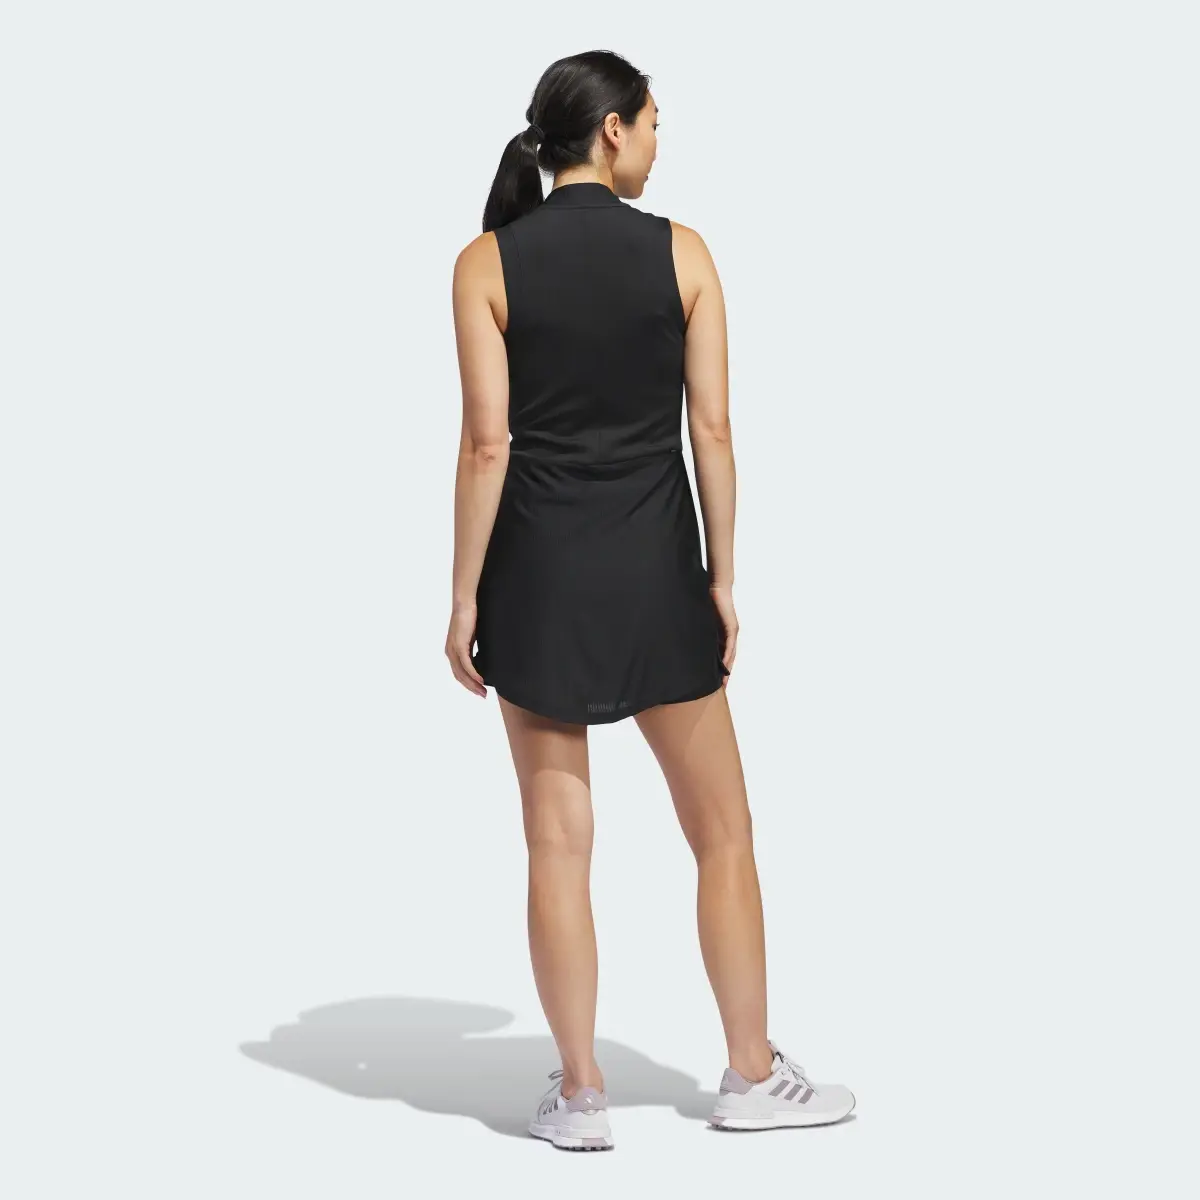 Adidas Women's Ultimate365 Sleeveless Dress. 3